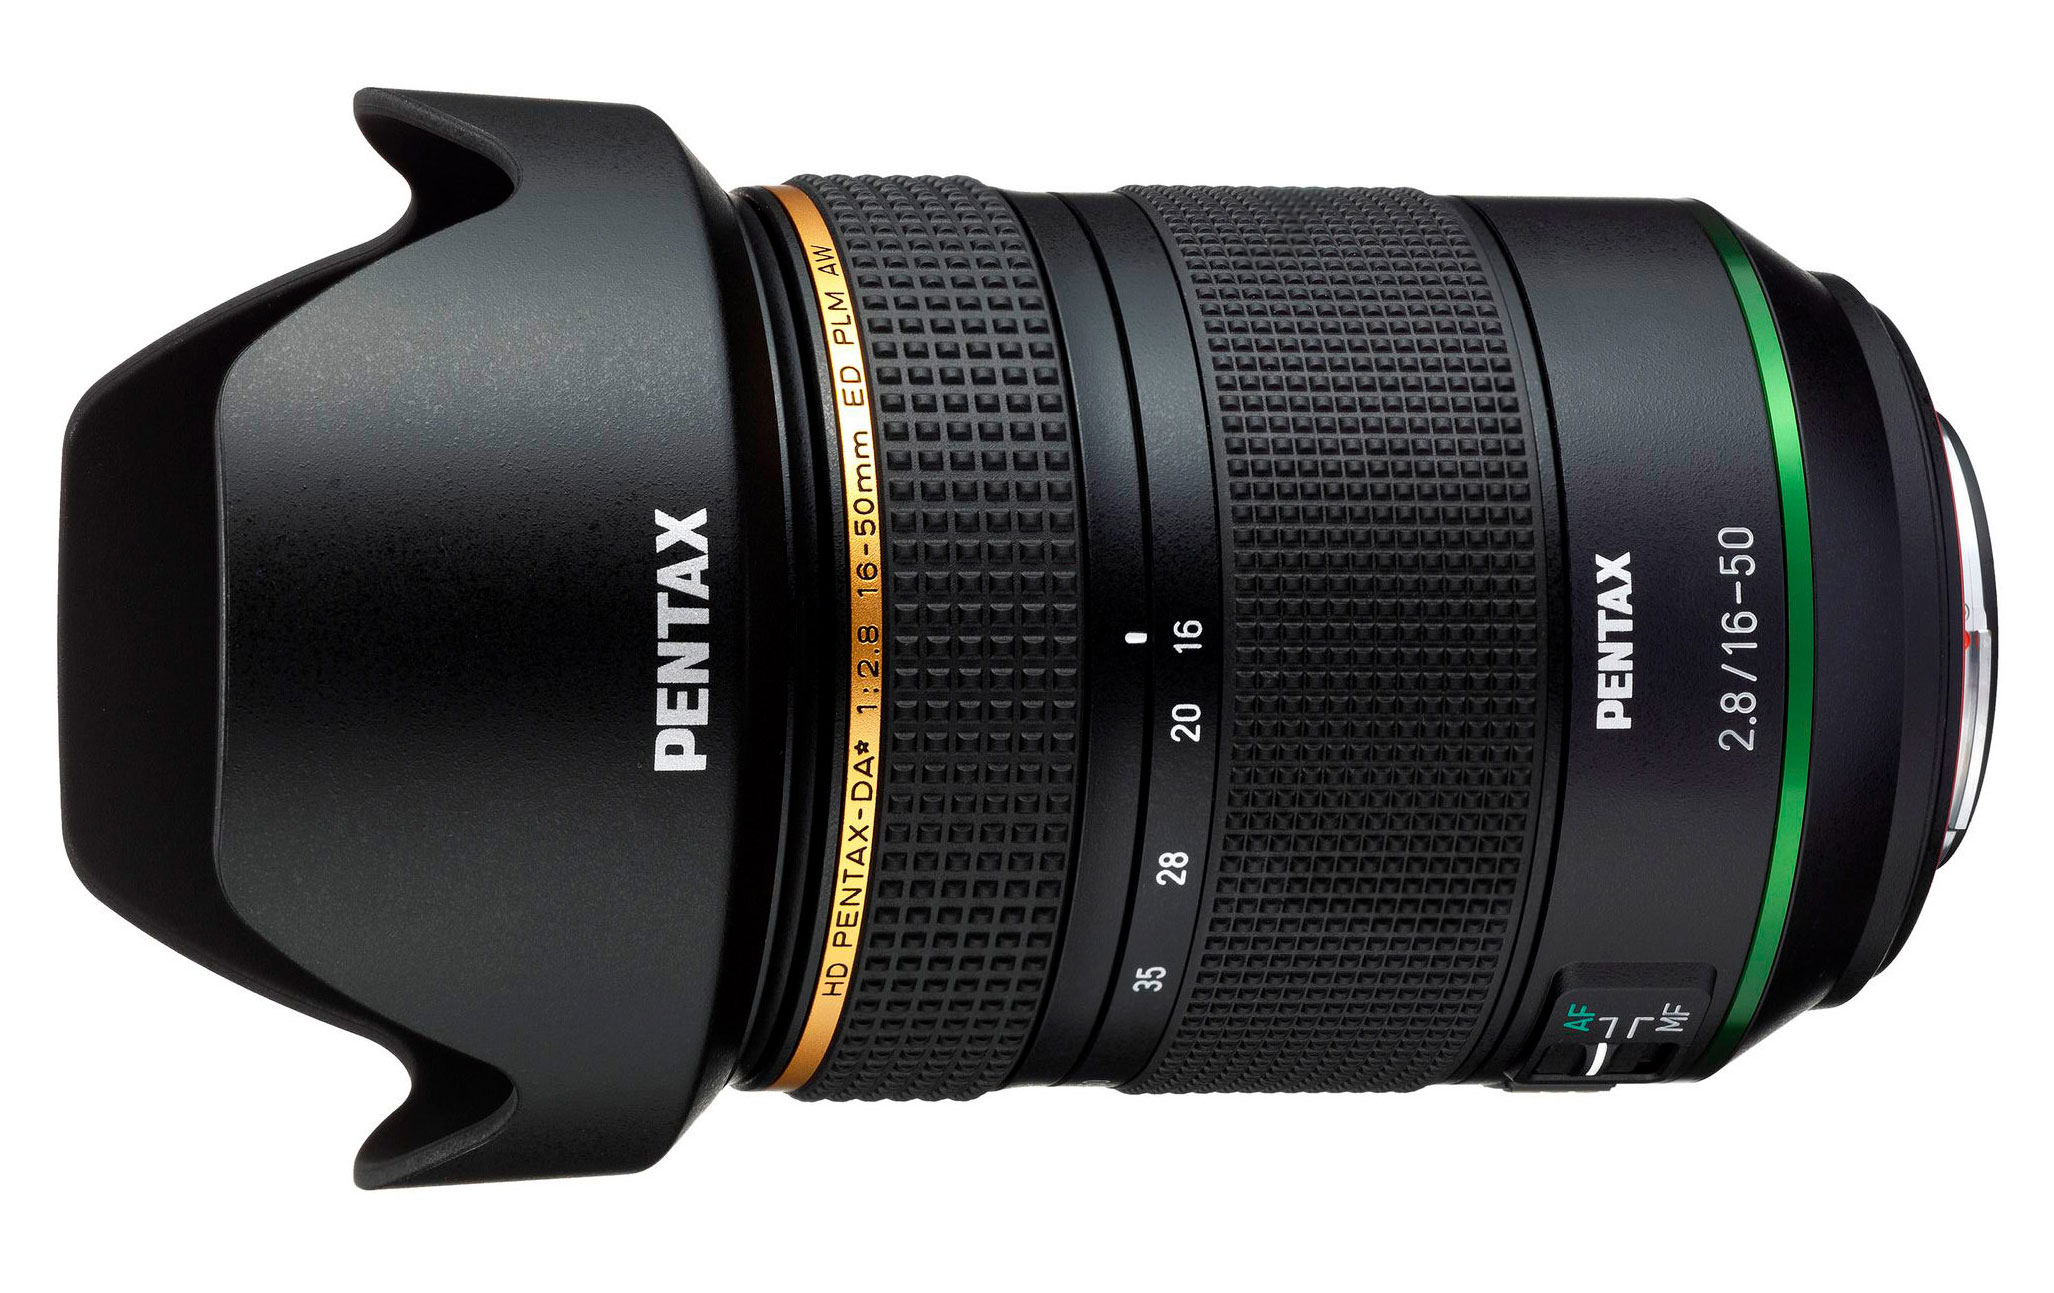 Pentax-DA HD 16-50mm f/2.8 ED PLM AW